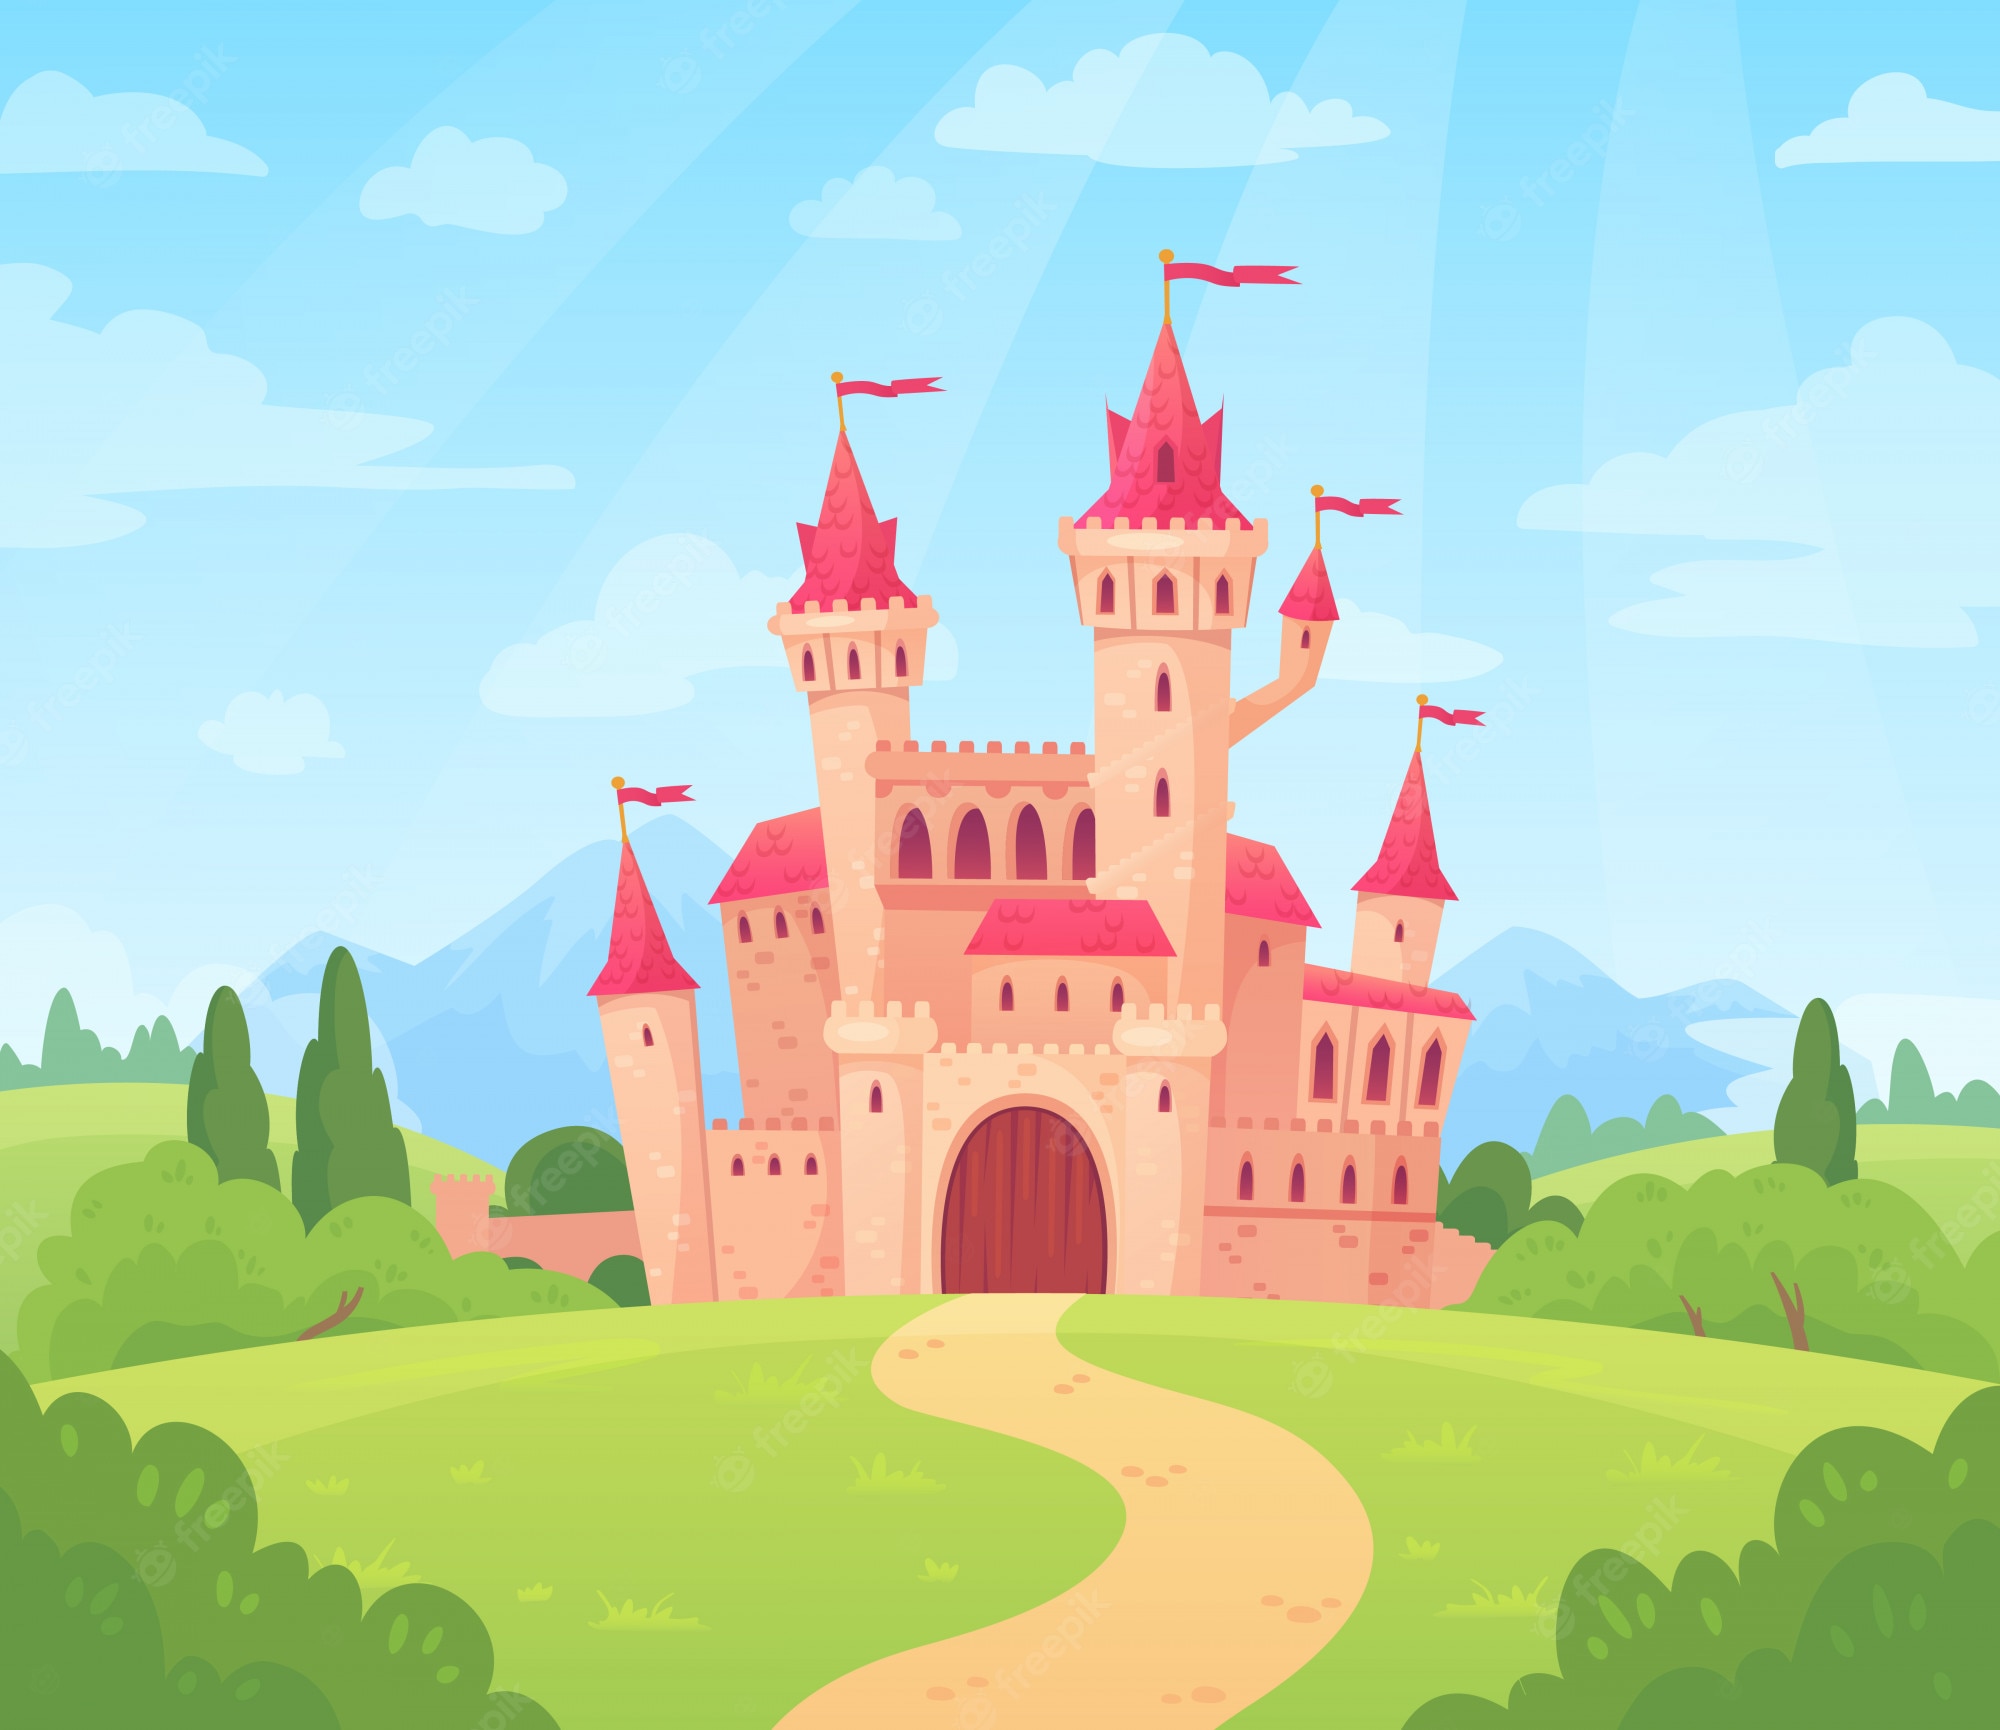 Cartoon Castle Image. Free Vectors, & PSD